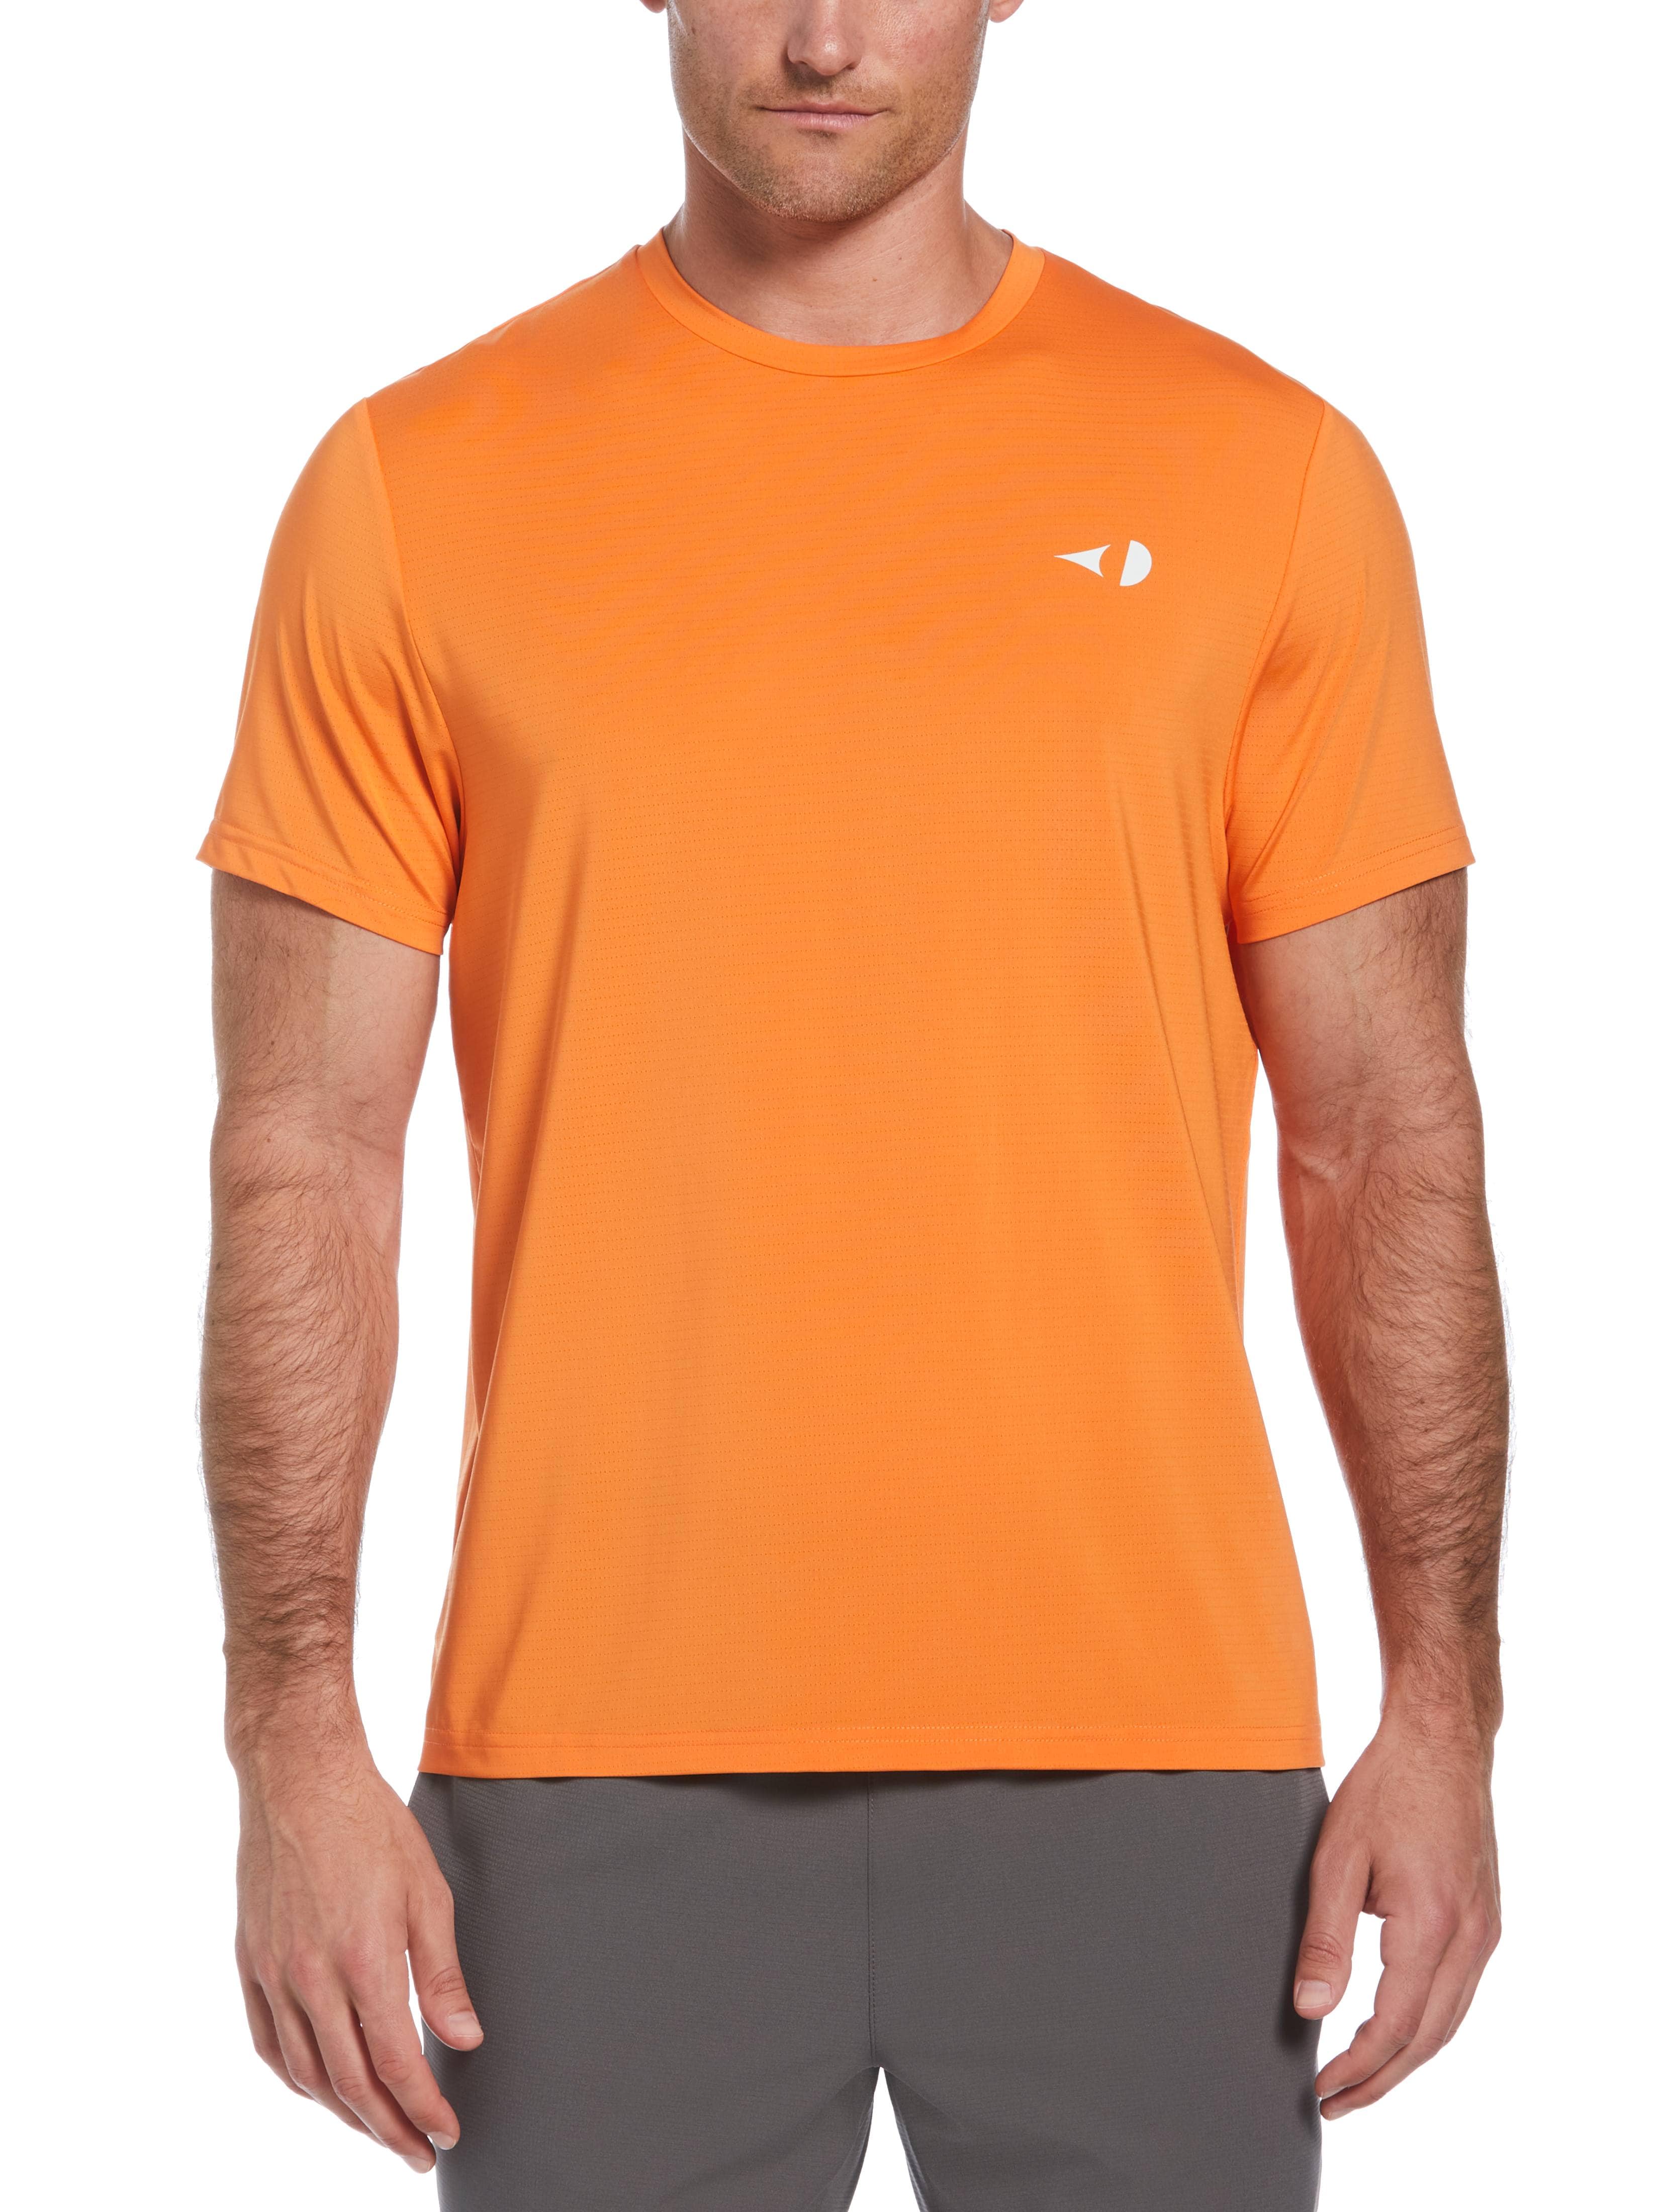 Grand Slam Mens Pin Hole Mesh Tennis T-Shirt, Size Large, Candied Yams Orange, Polyester/Elastane | Golf Apparel Shop